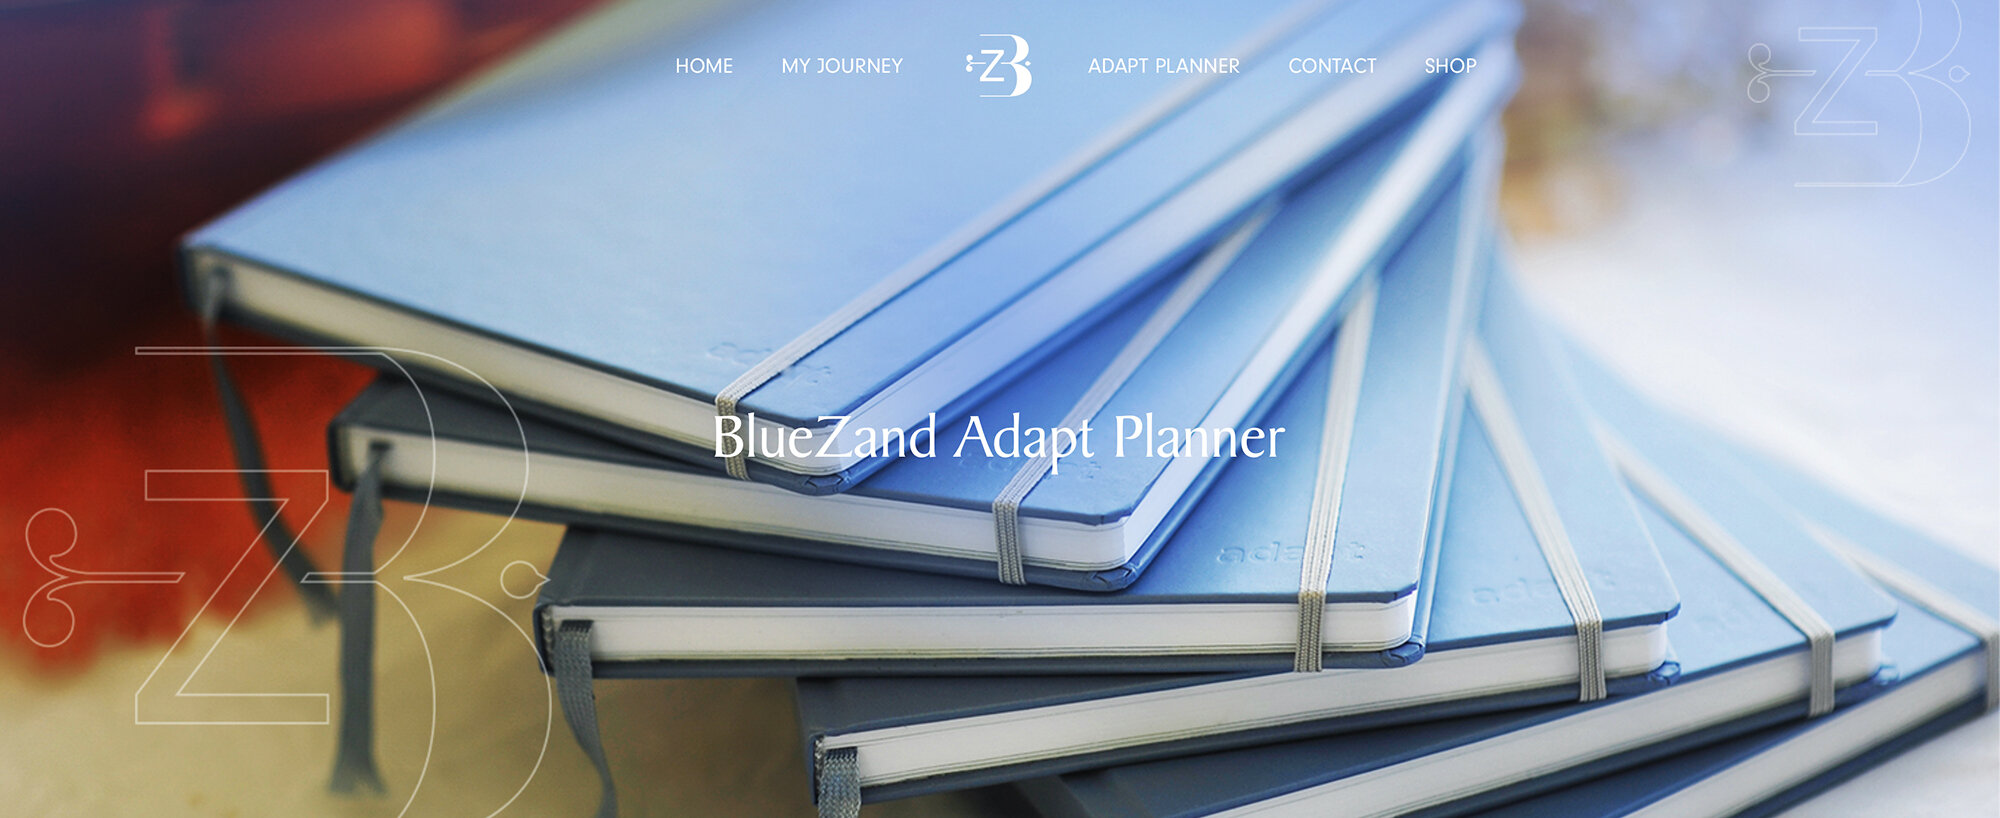 METERA Branding-BlueZand-Product Image.png